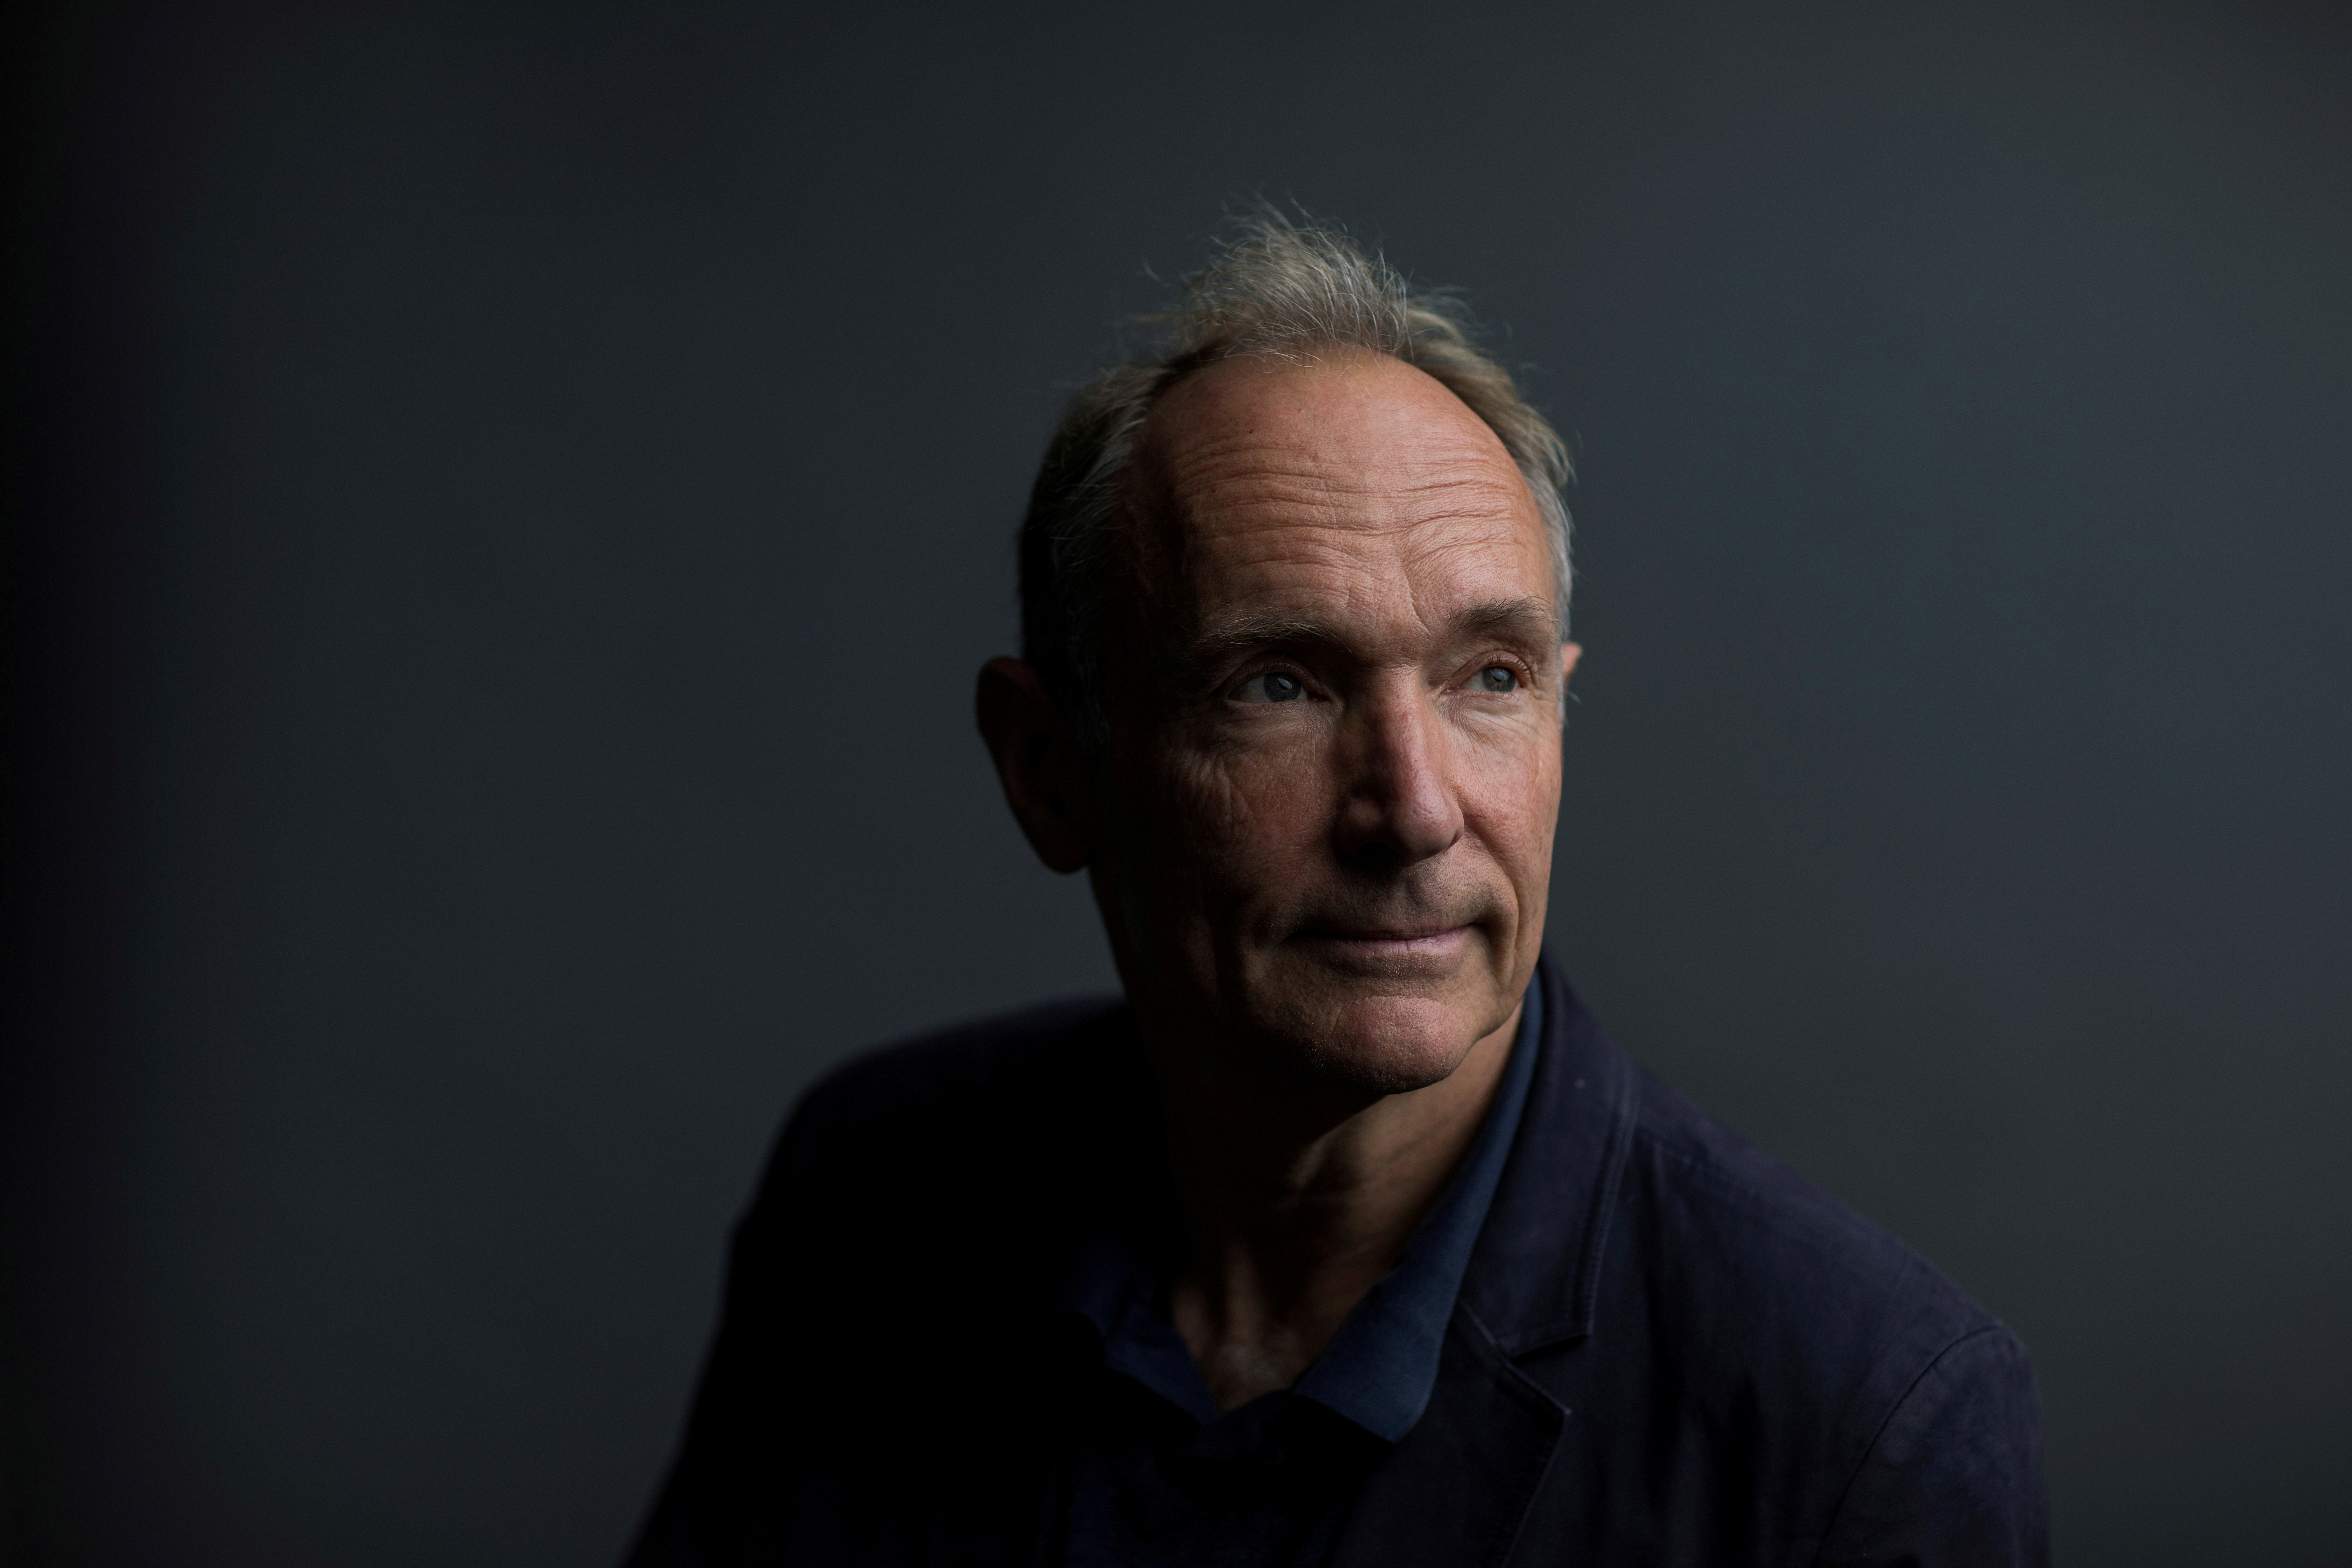  Tim Berners-Lee, conocido como el padre de la web (REUTERS/Simon Dawson/File Photo)